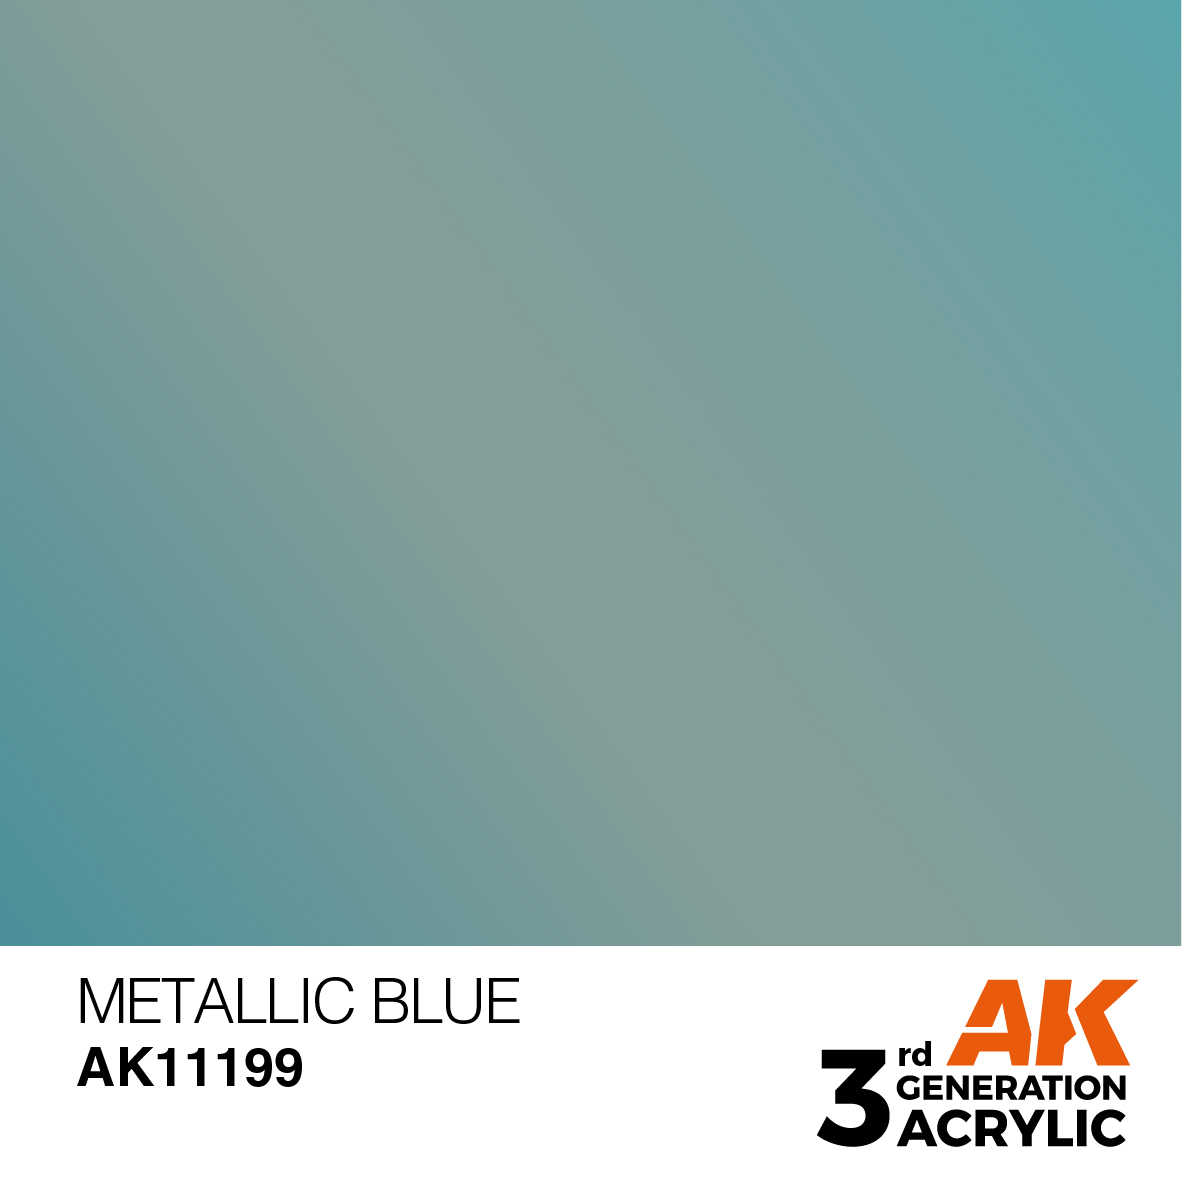 METALLIC BLUE – METALLIC